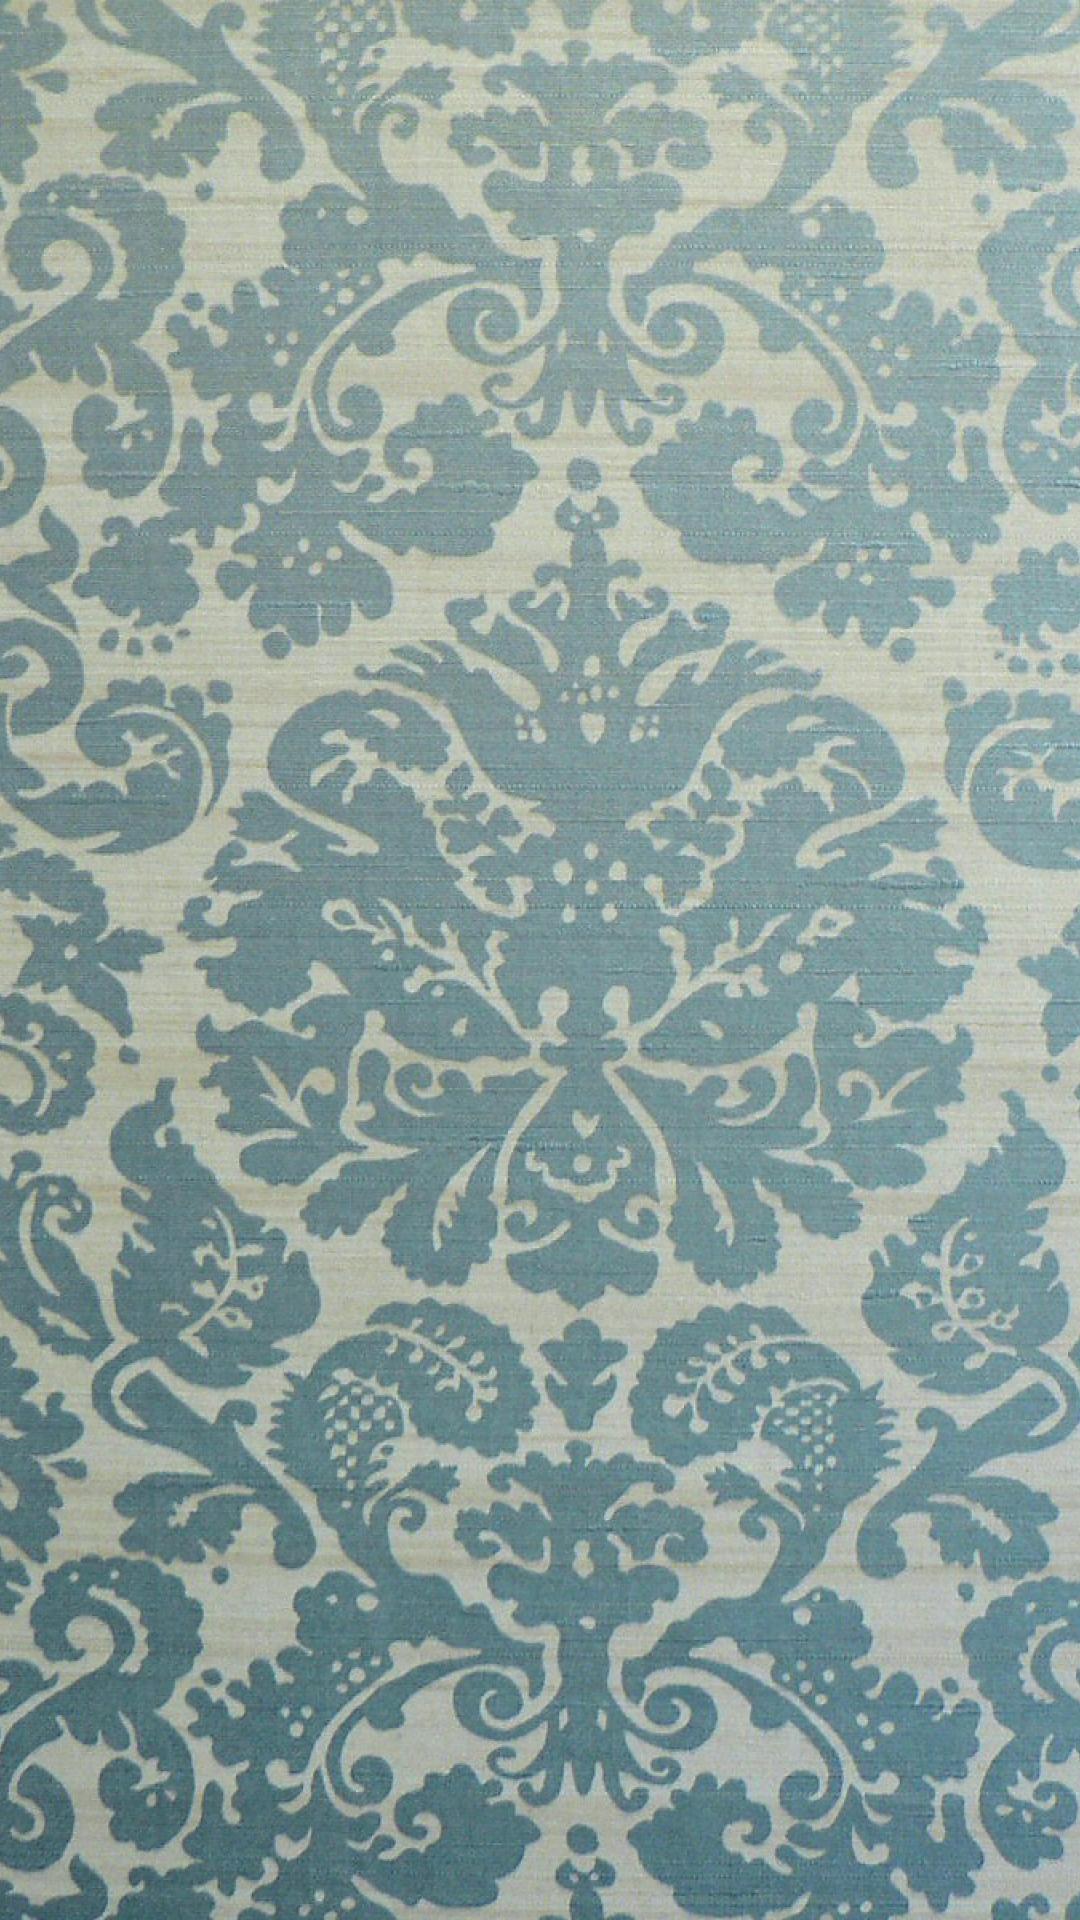 Vintage Pattern Backgrounds Iphone 6 Plus Wallpaper